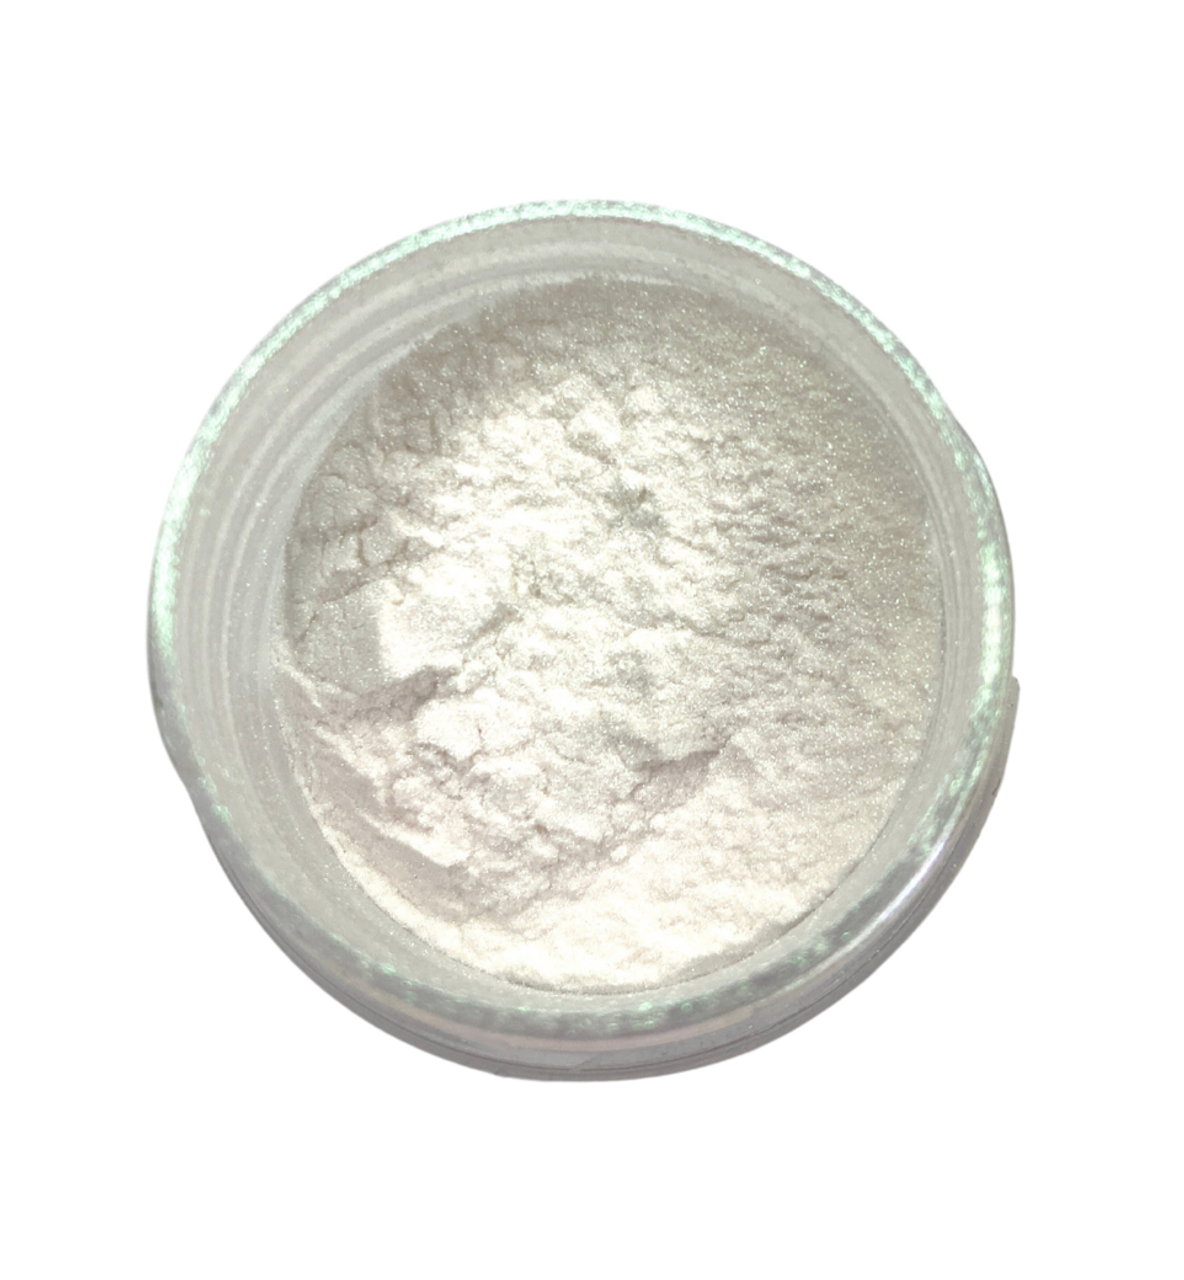 CNMI Skin Safe Long Lasting Fluorescent Powder for Art Craft Nail Acrylic  Paint Self Glowing Phosphor Powder UV Powder - China Pigment, chameleon  pigment